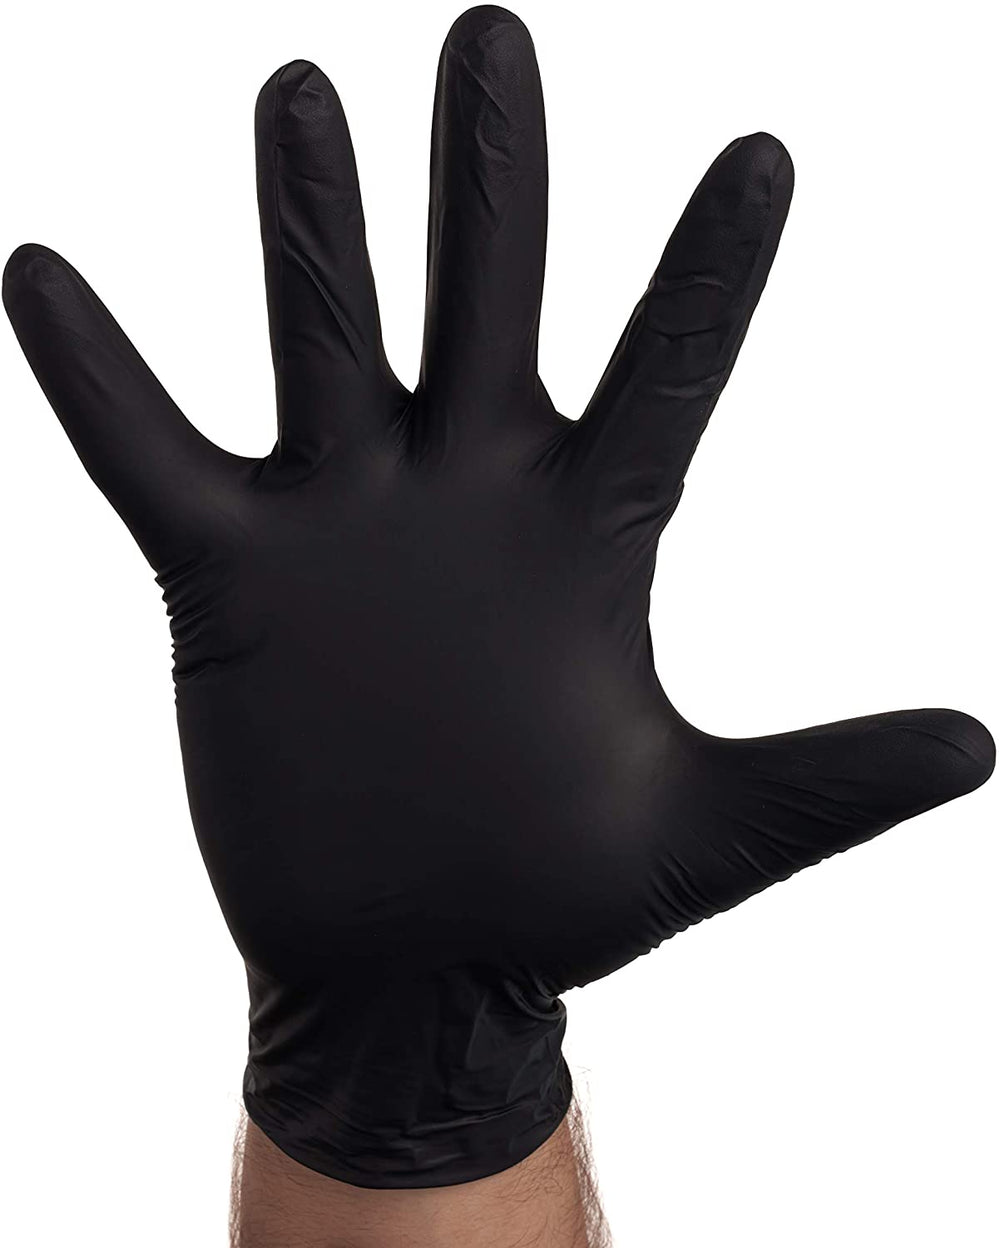 (CG-01XX) Nitrile Glove, 5 MIL, Powder Free, 100 per Box